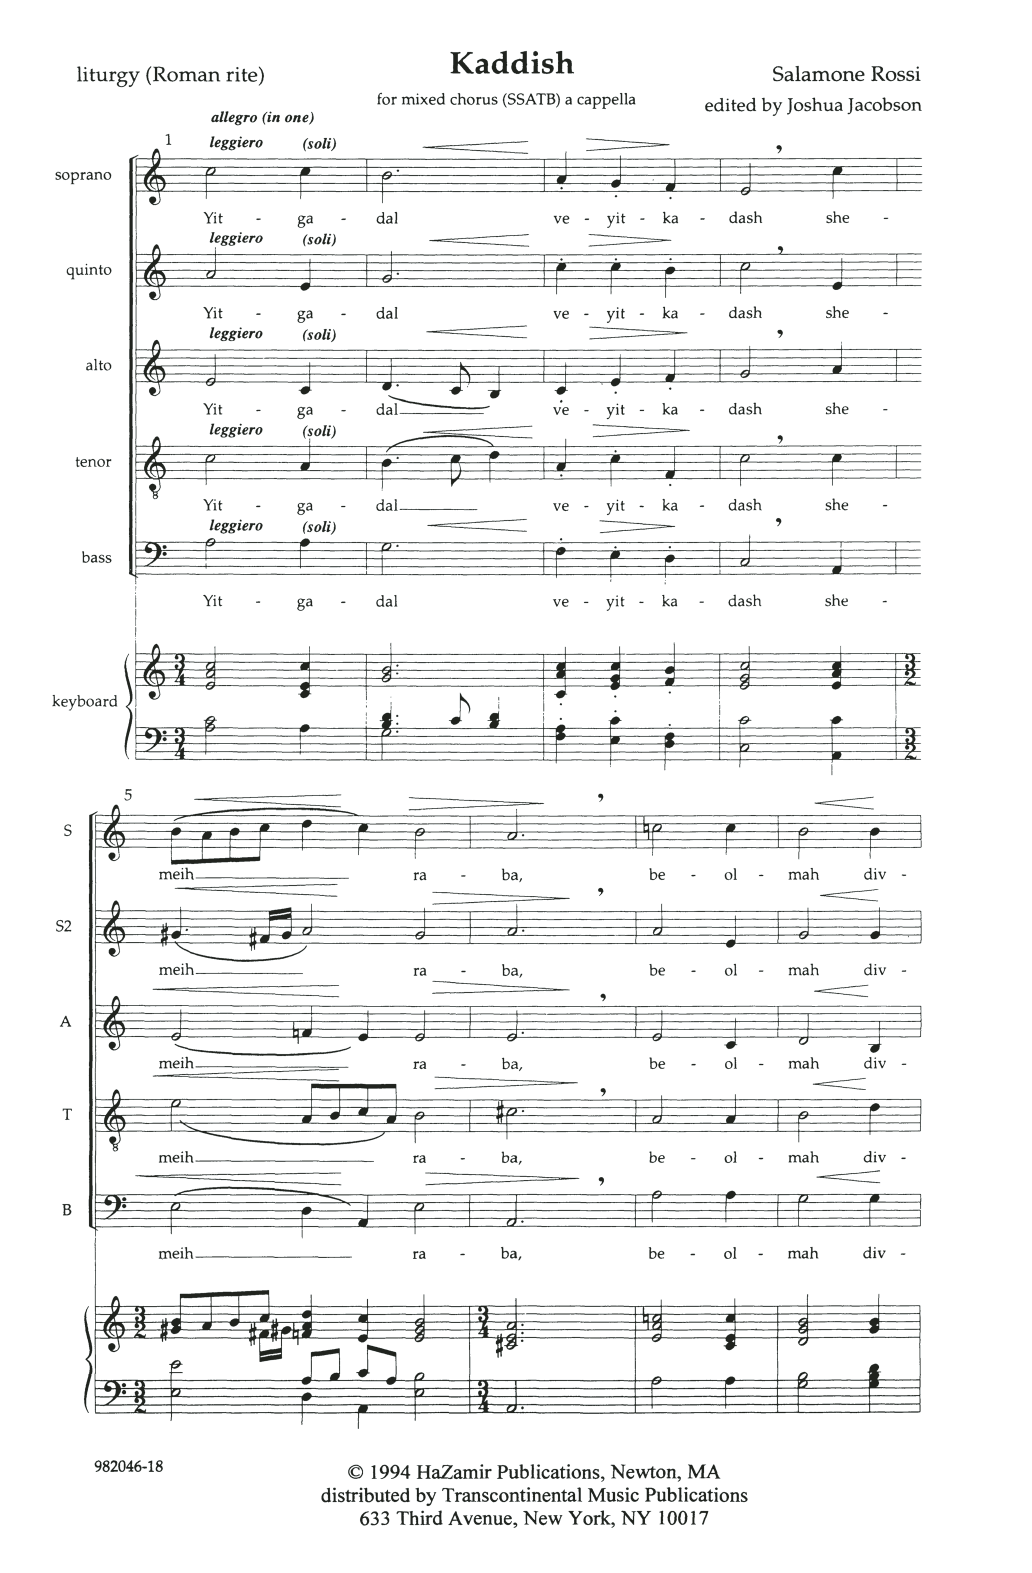 Salamone Rossi Kaddish Sheet Music Notes & Chords for SATB Choir - Download or Print PDF